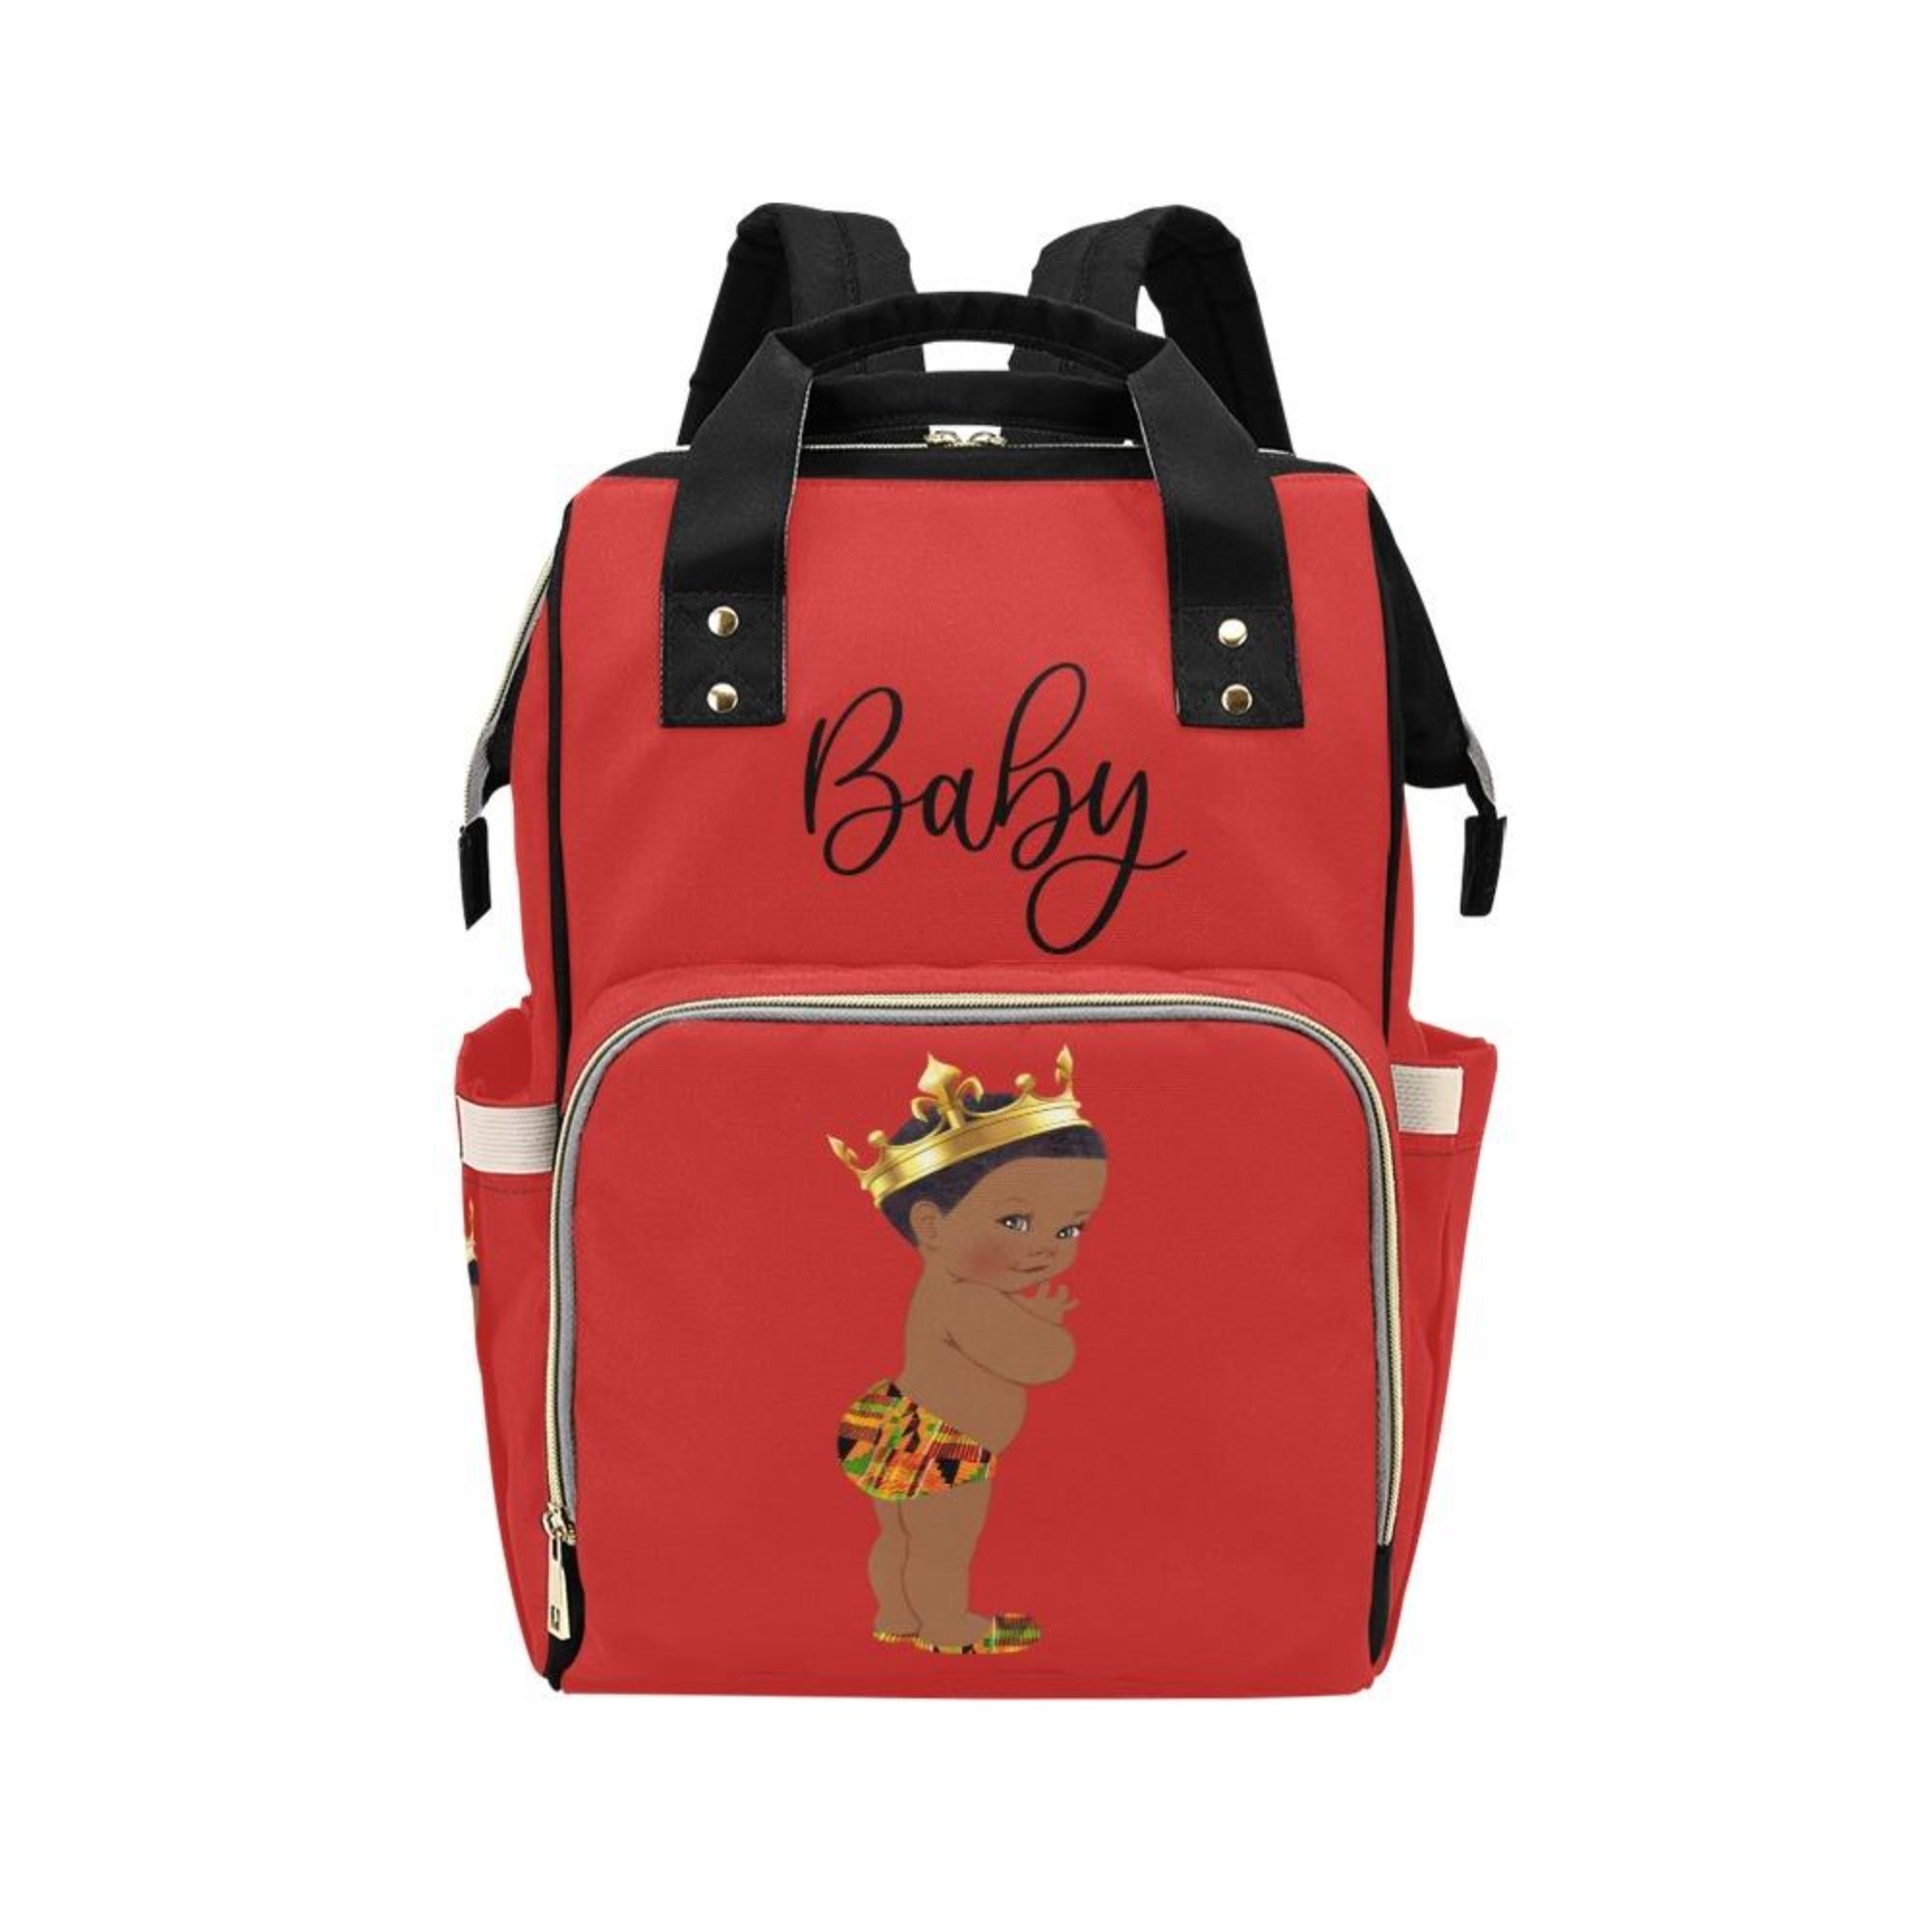 Designer Diaper Bag - Ethnic African American King Baby Boy - Dark Red Multi-Function Backpack